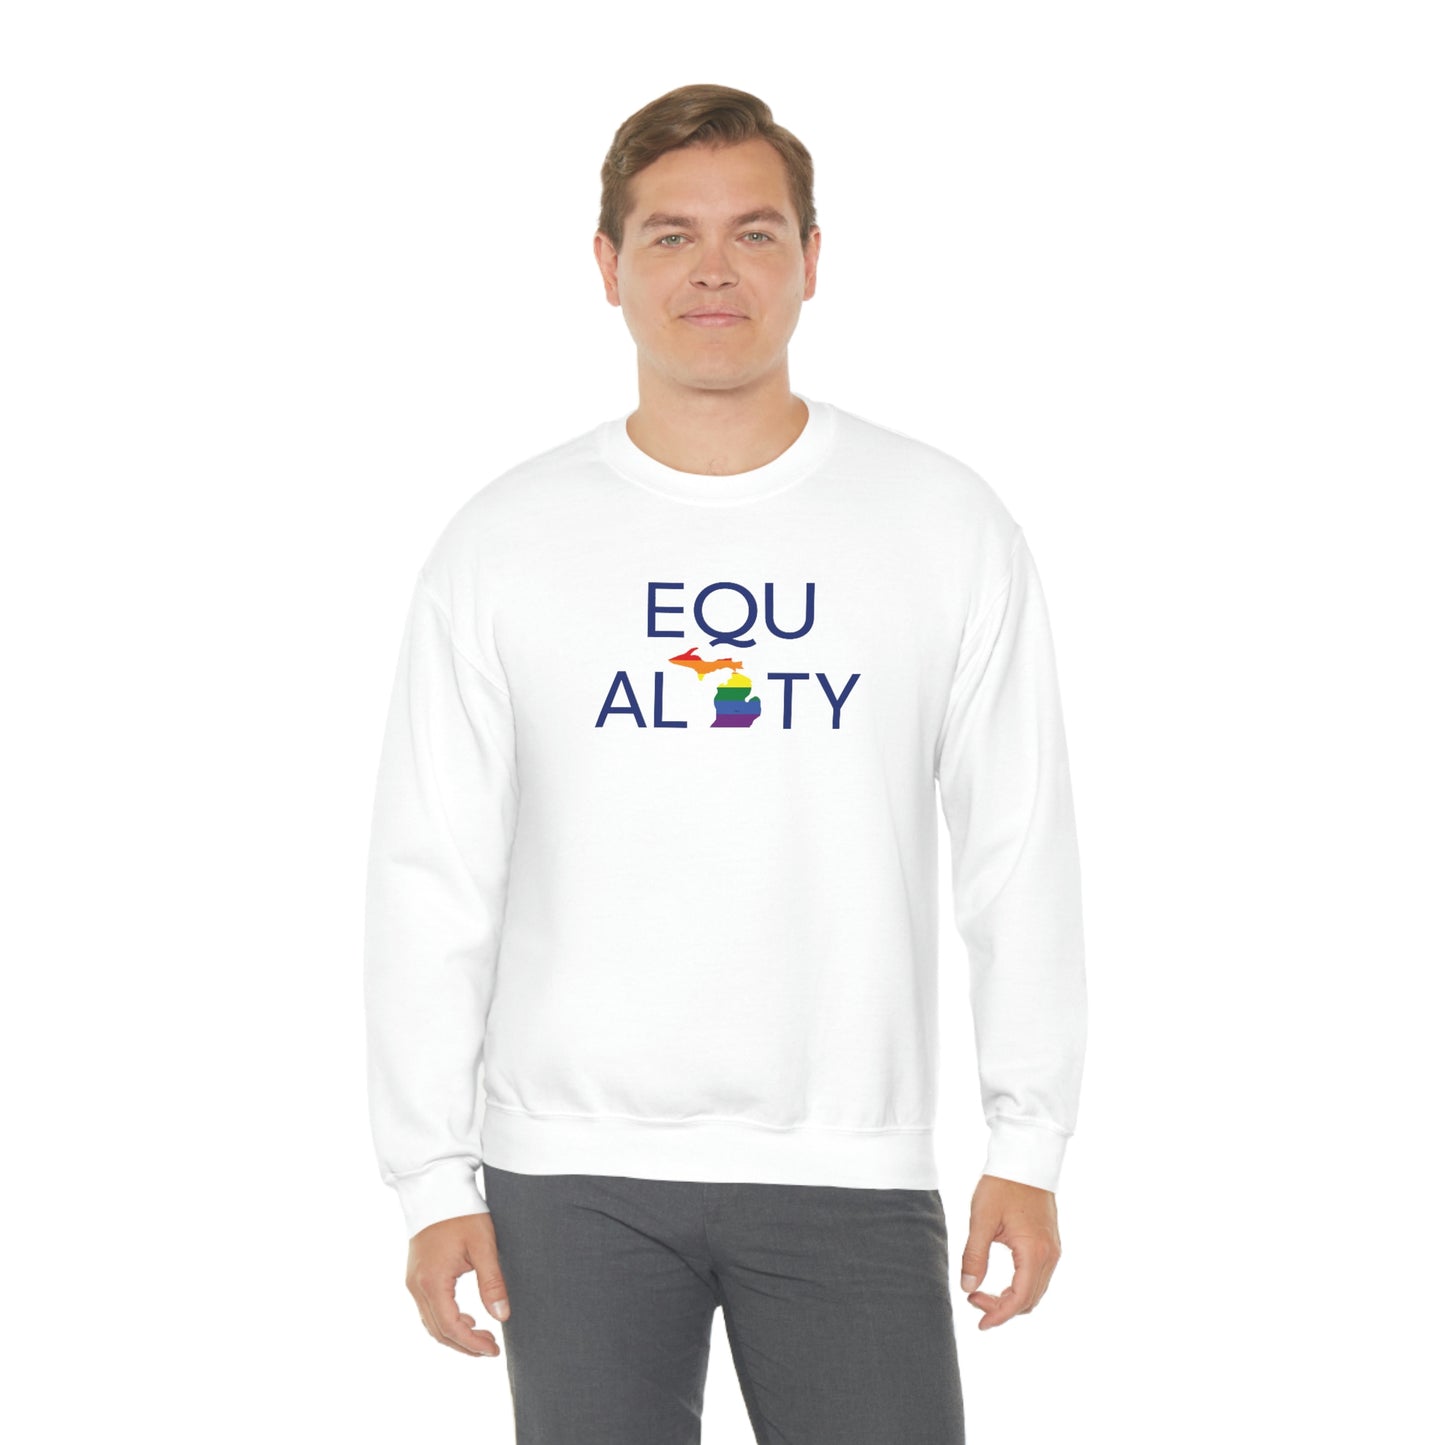 Michigan 'Equality' Sweatshirt | Unisex Standard